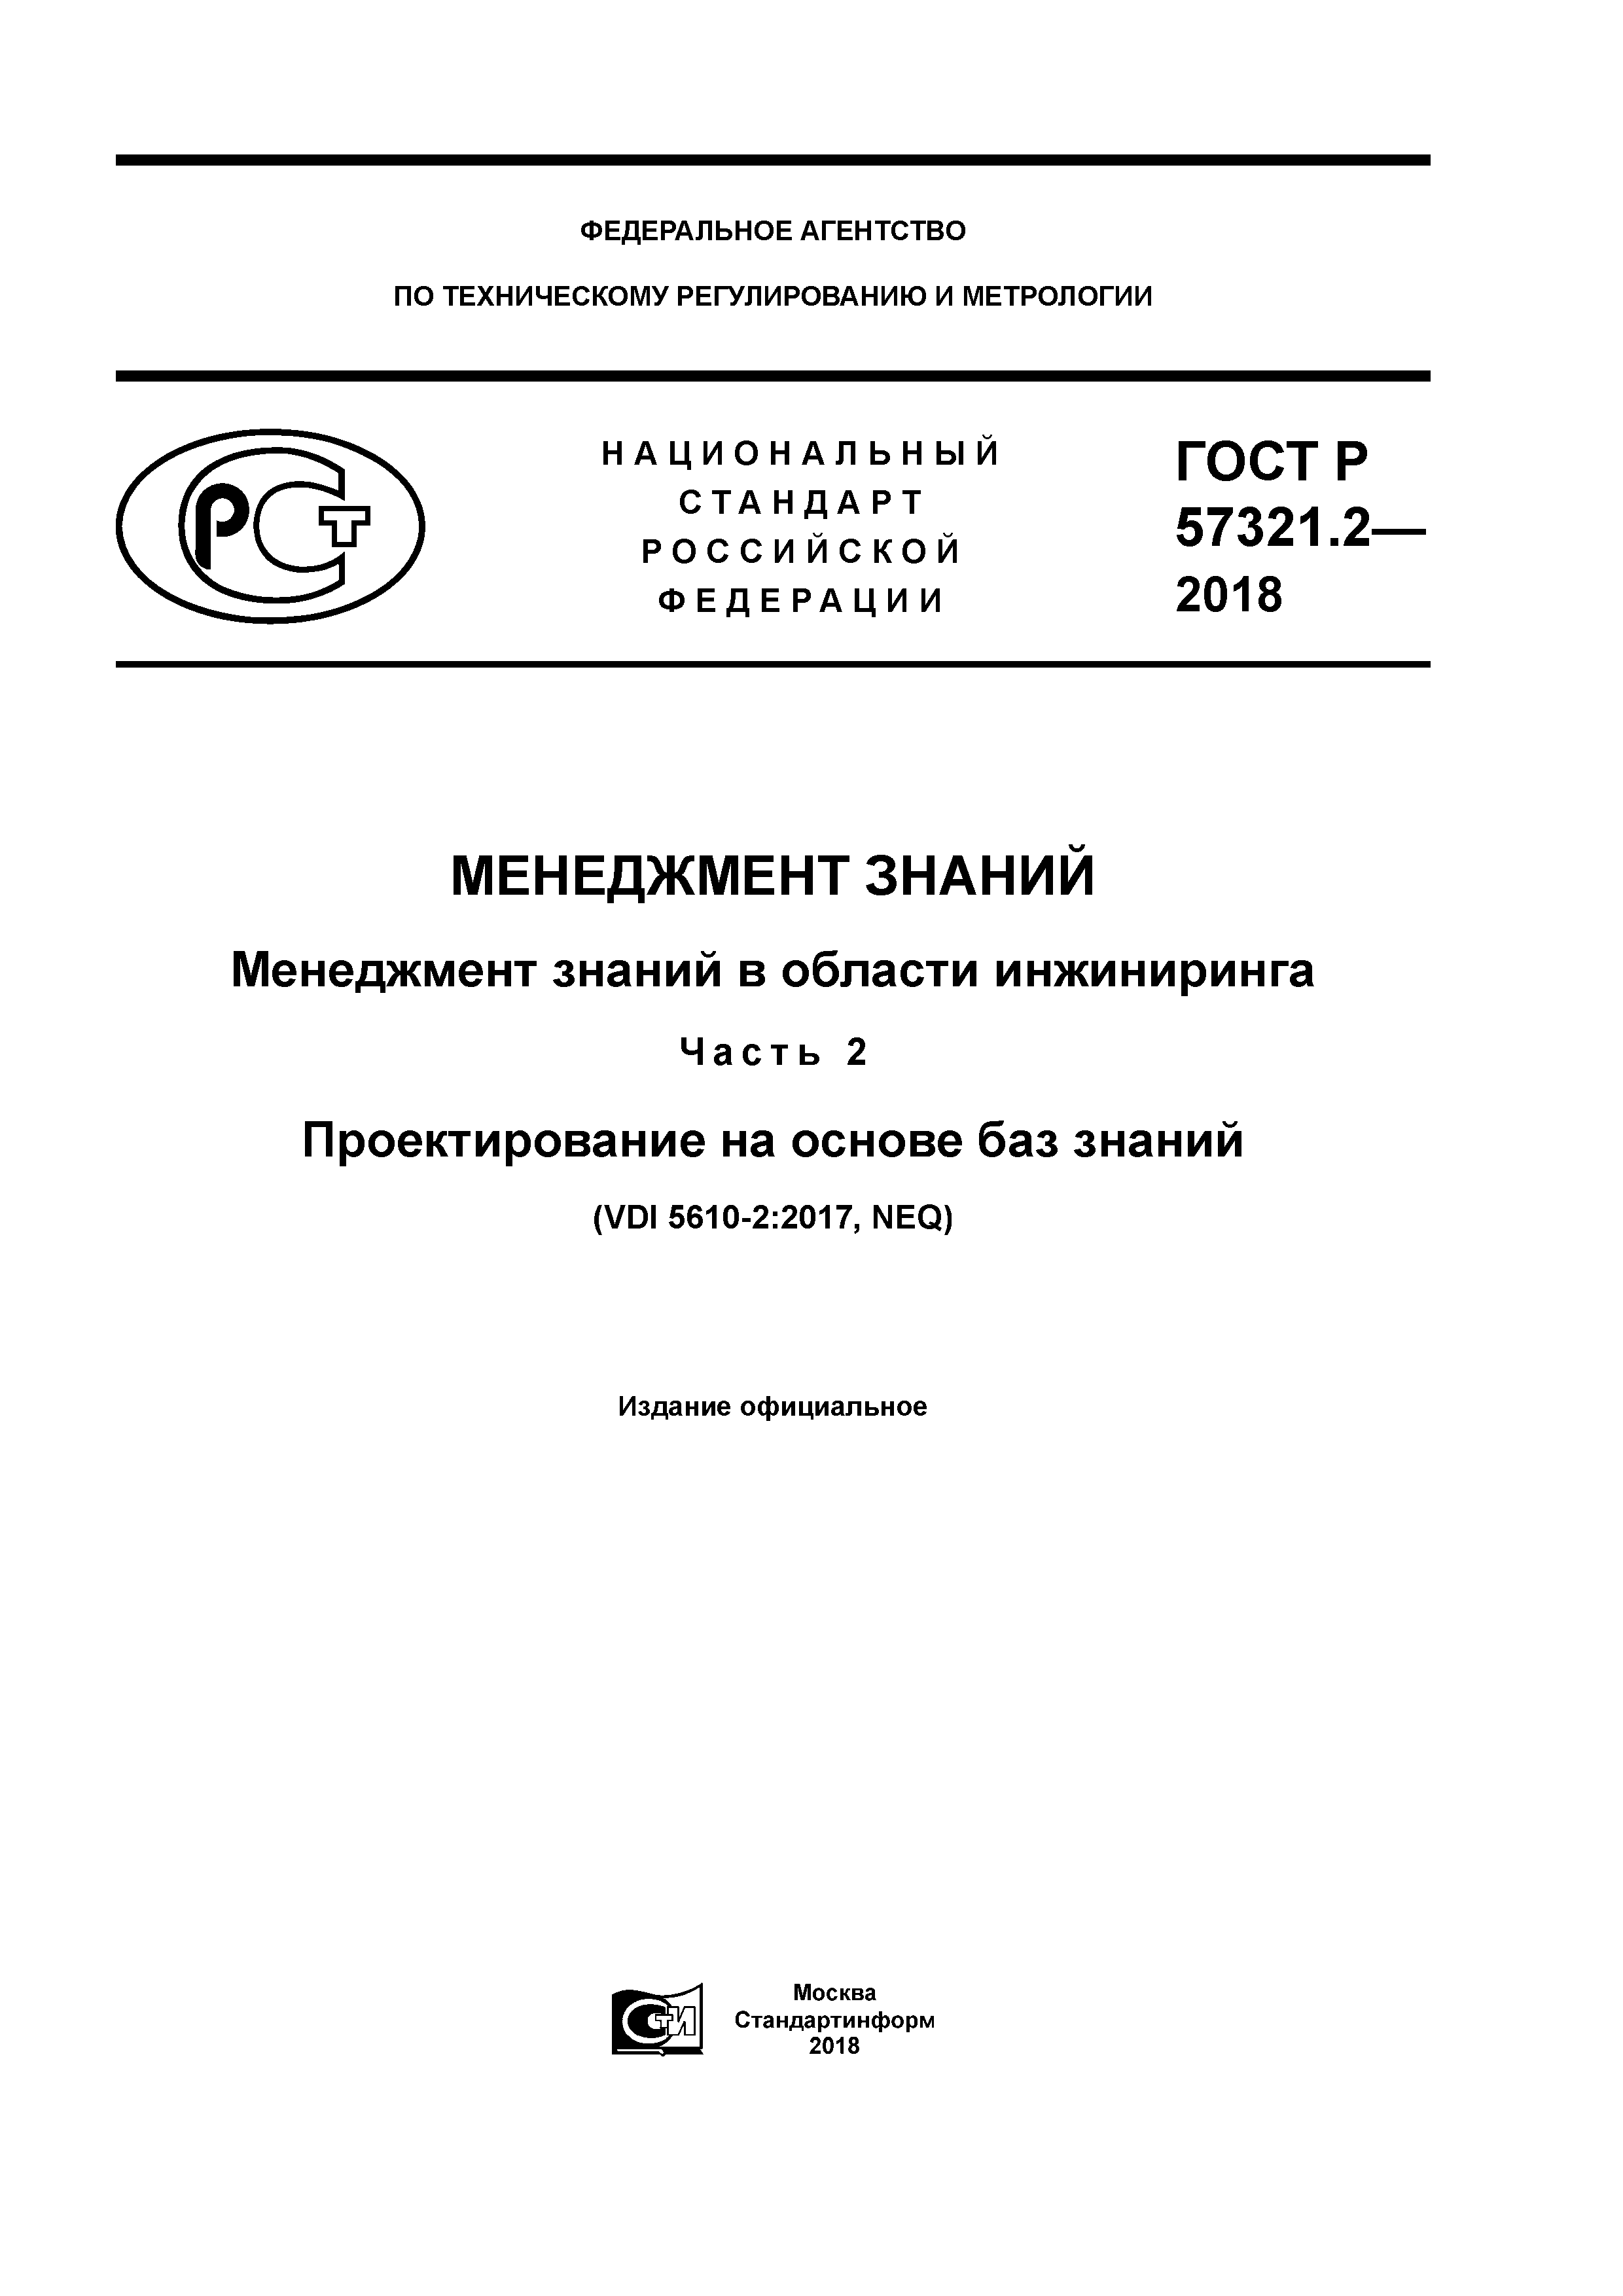 ГОСТ Р 57321.2-2018